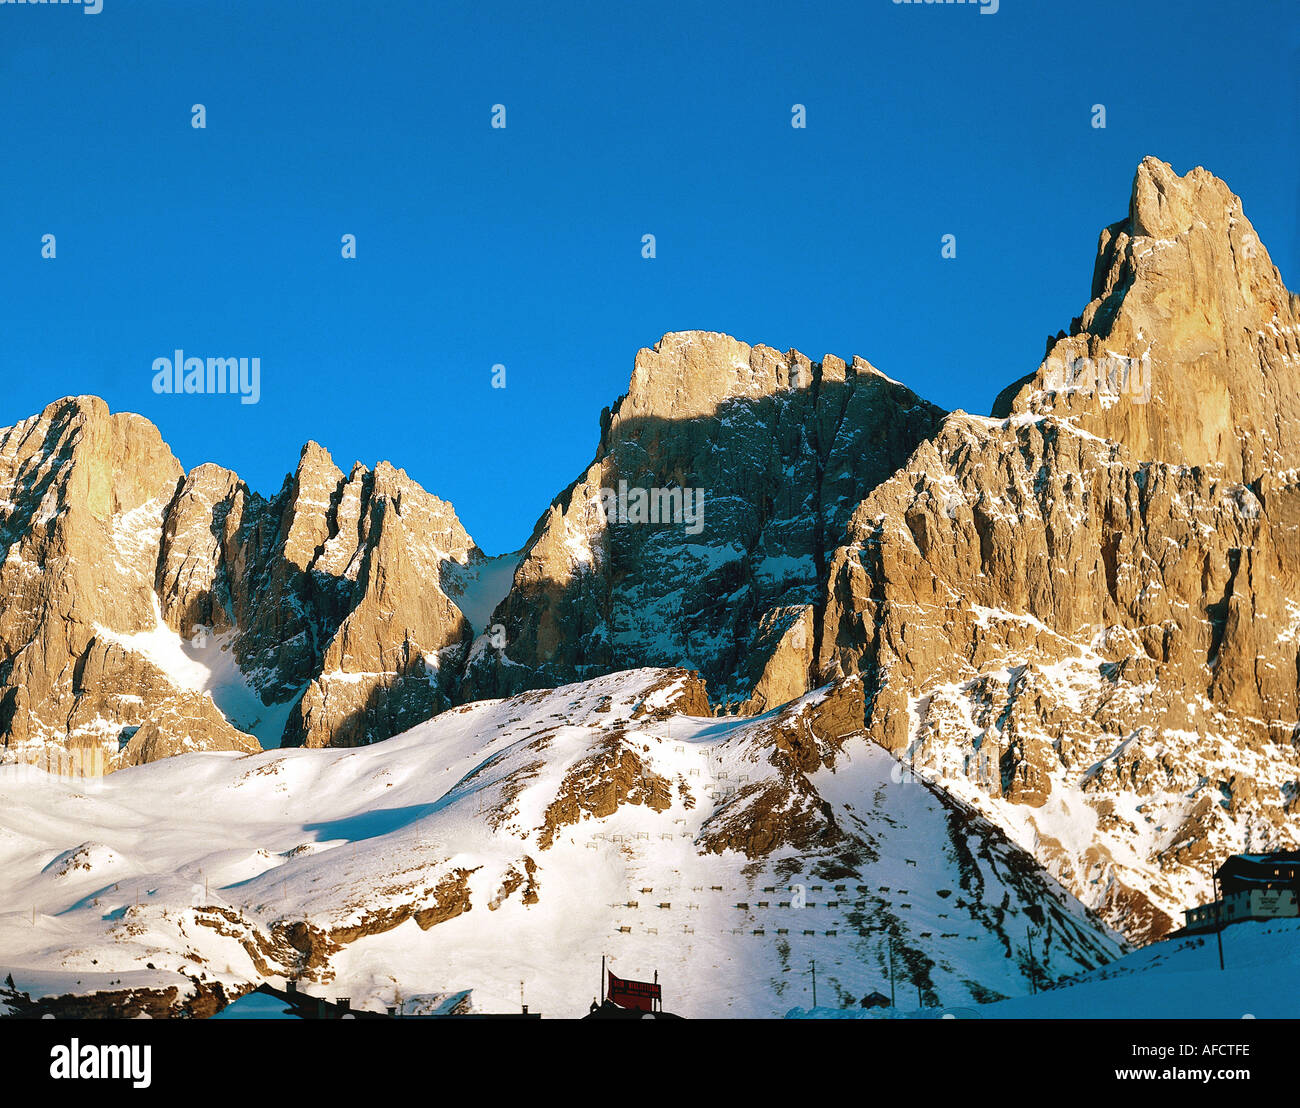 Geo. allg., Berge, Gebirge, Südtirol Pala Gruppe, v.l.n.r: Cima di Burelloni, Cima di Vezzana, Cimone della Pala, alpen berge be Stock Photo